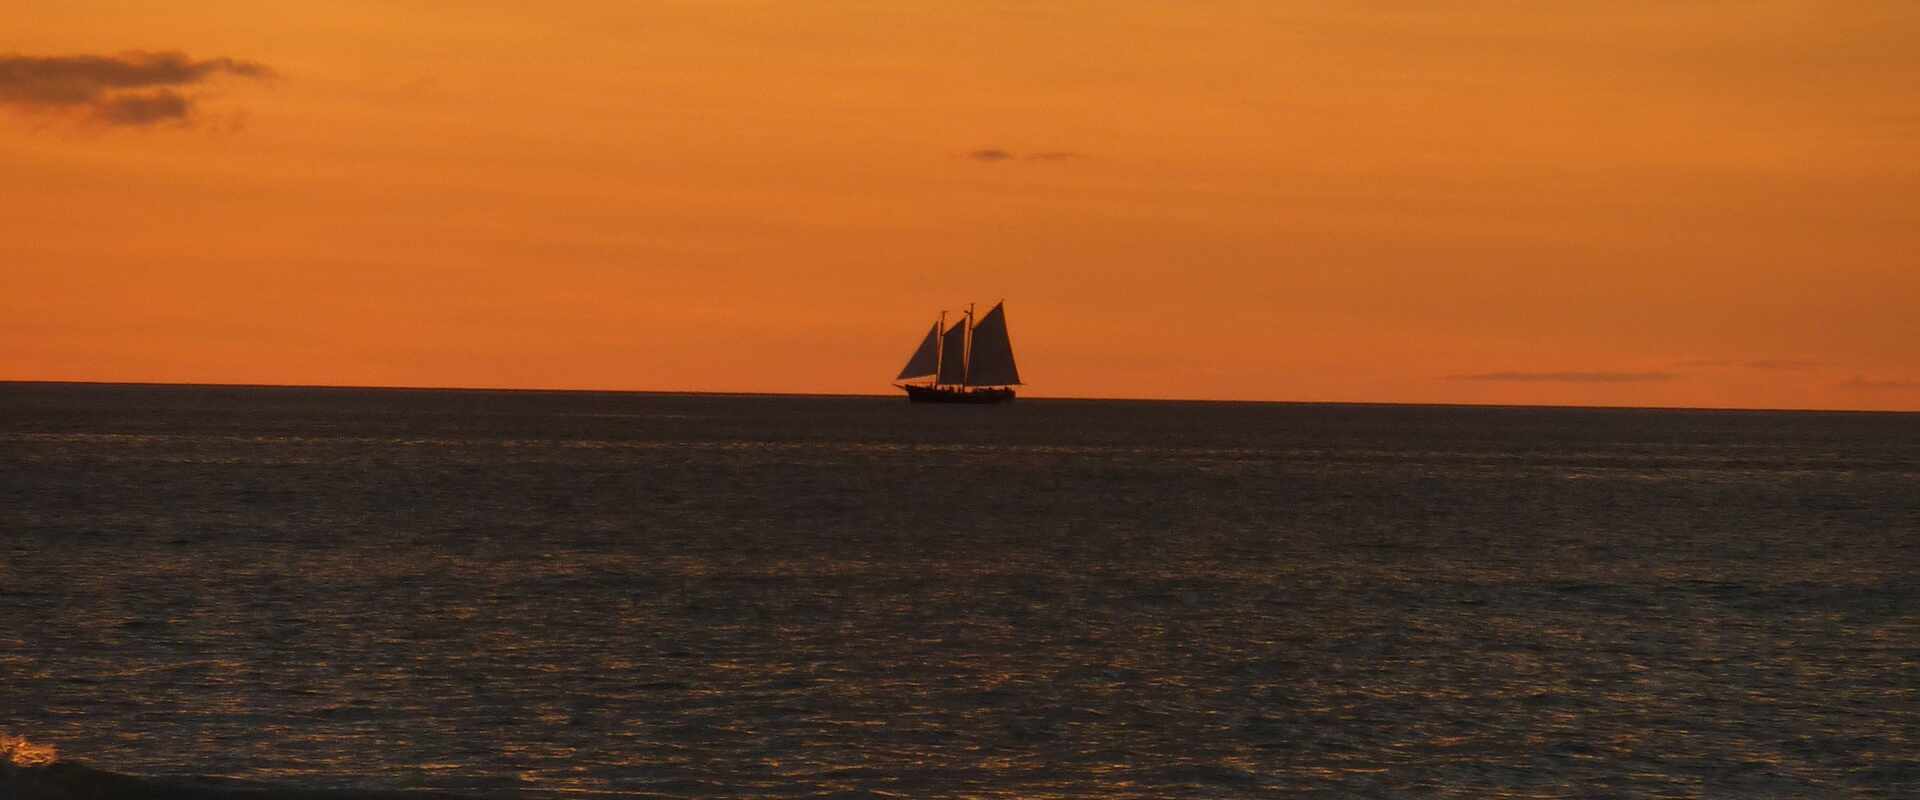 Sailing ship sunset Broome Western Australia 12 5